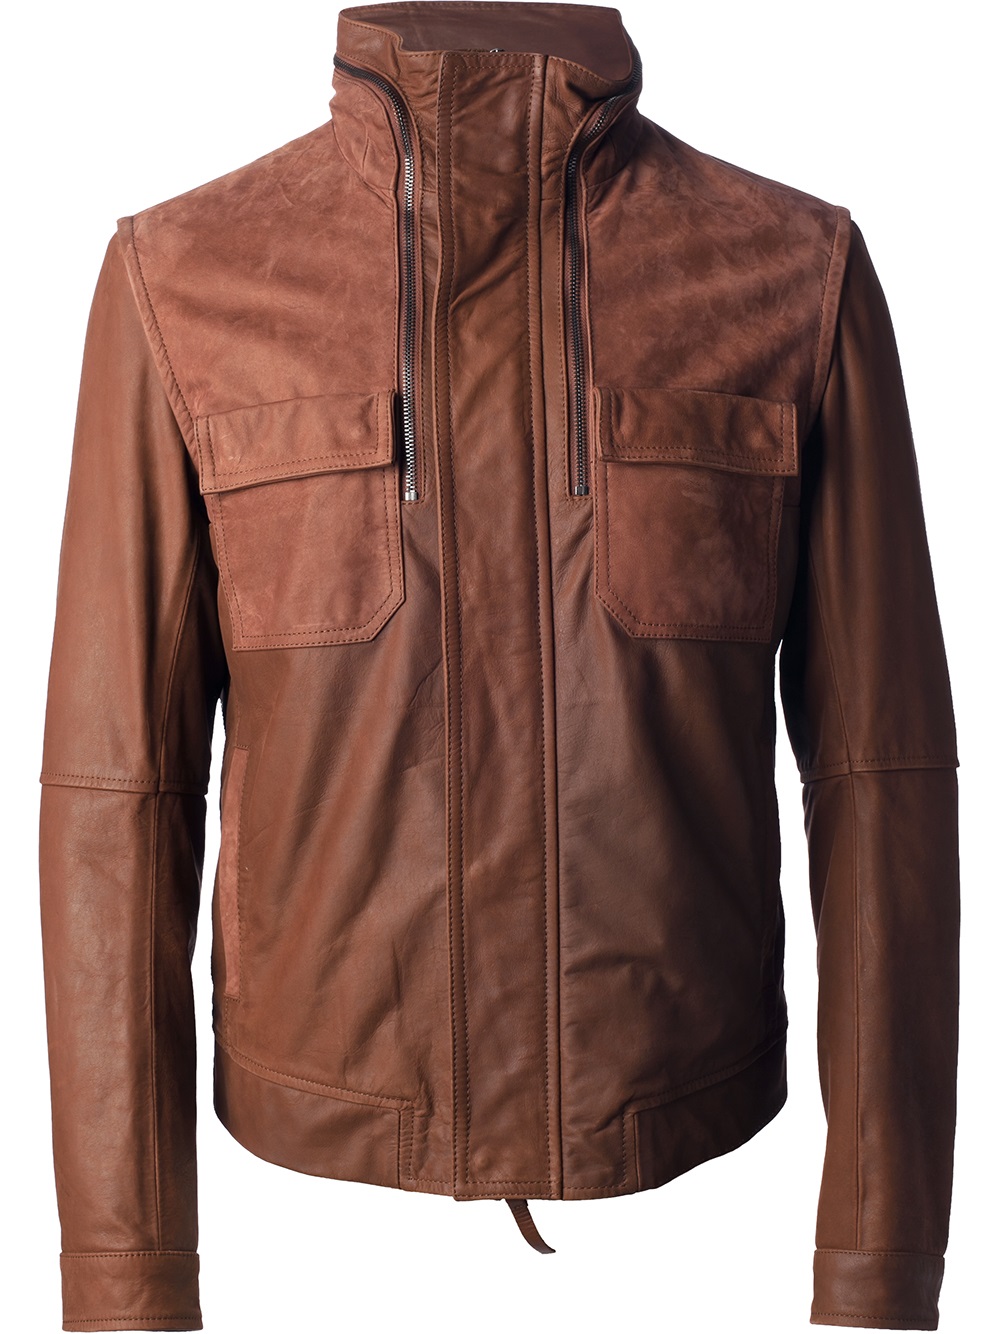 Giorgio Armani Leather Jacket Mens Belgium, SAVE 35% 